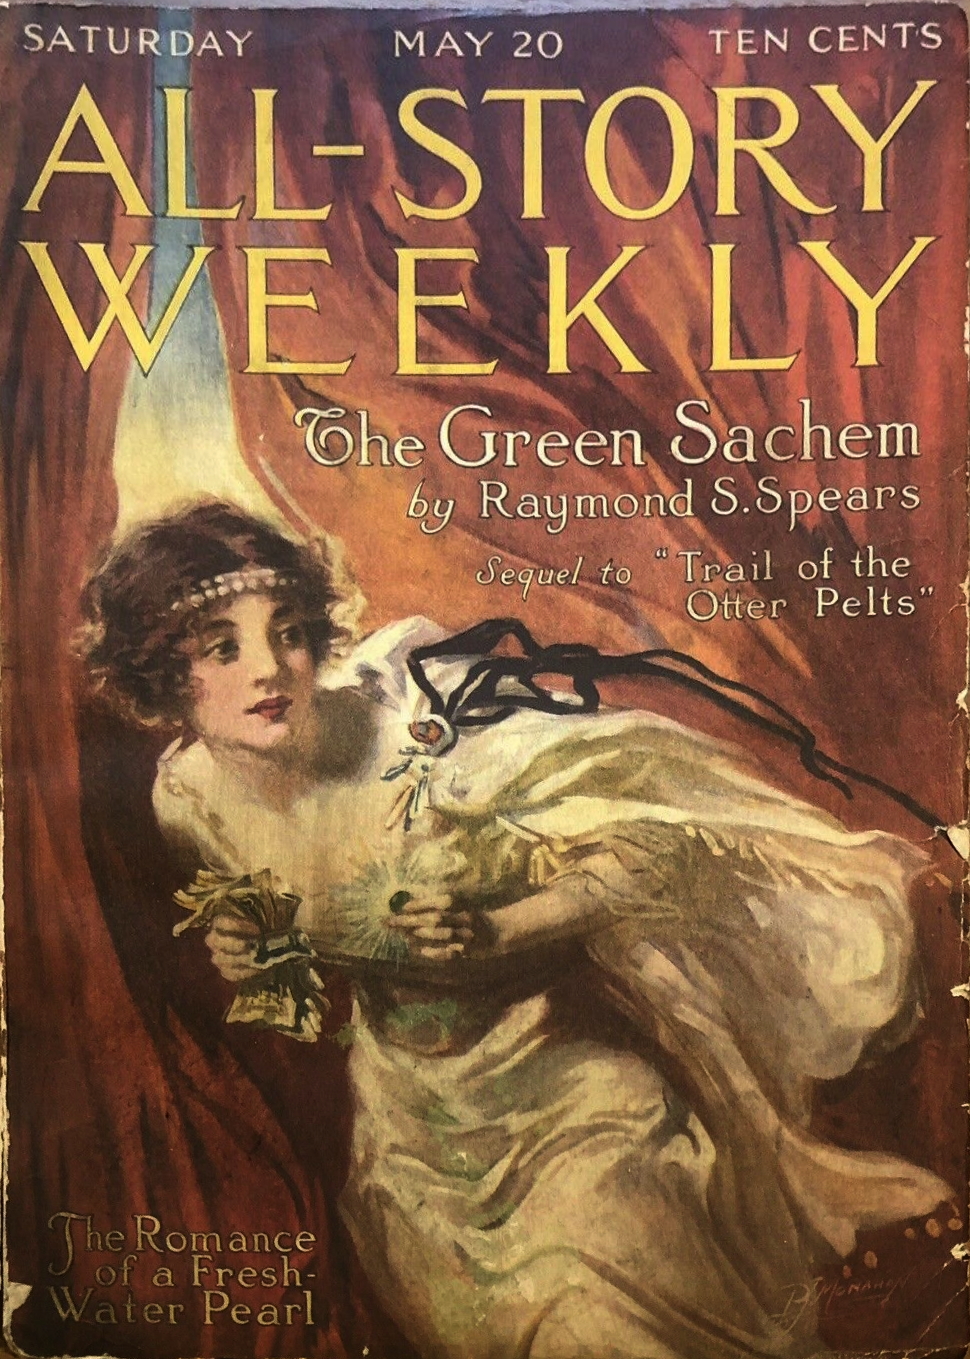 All-Story Weekly - May 20 1916